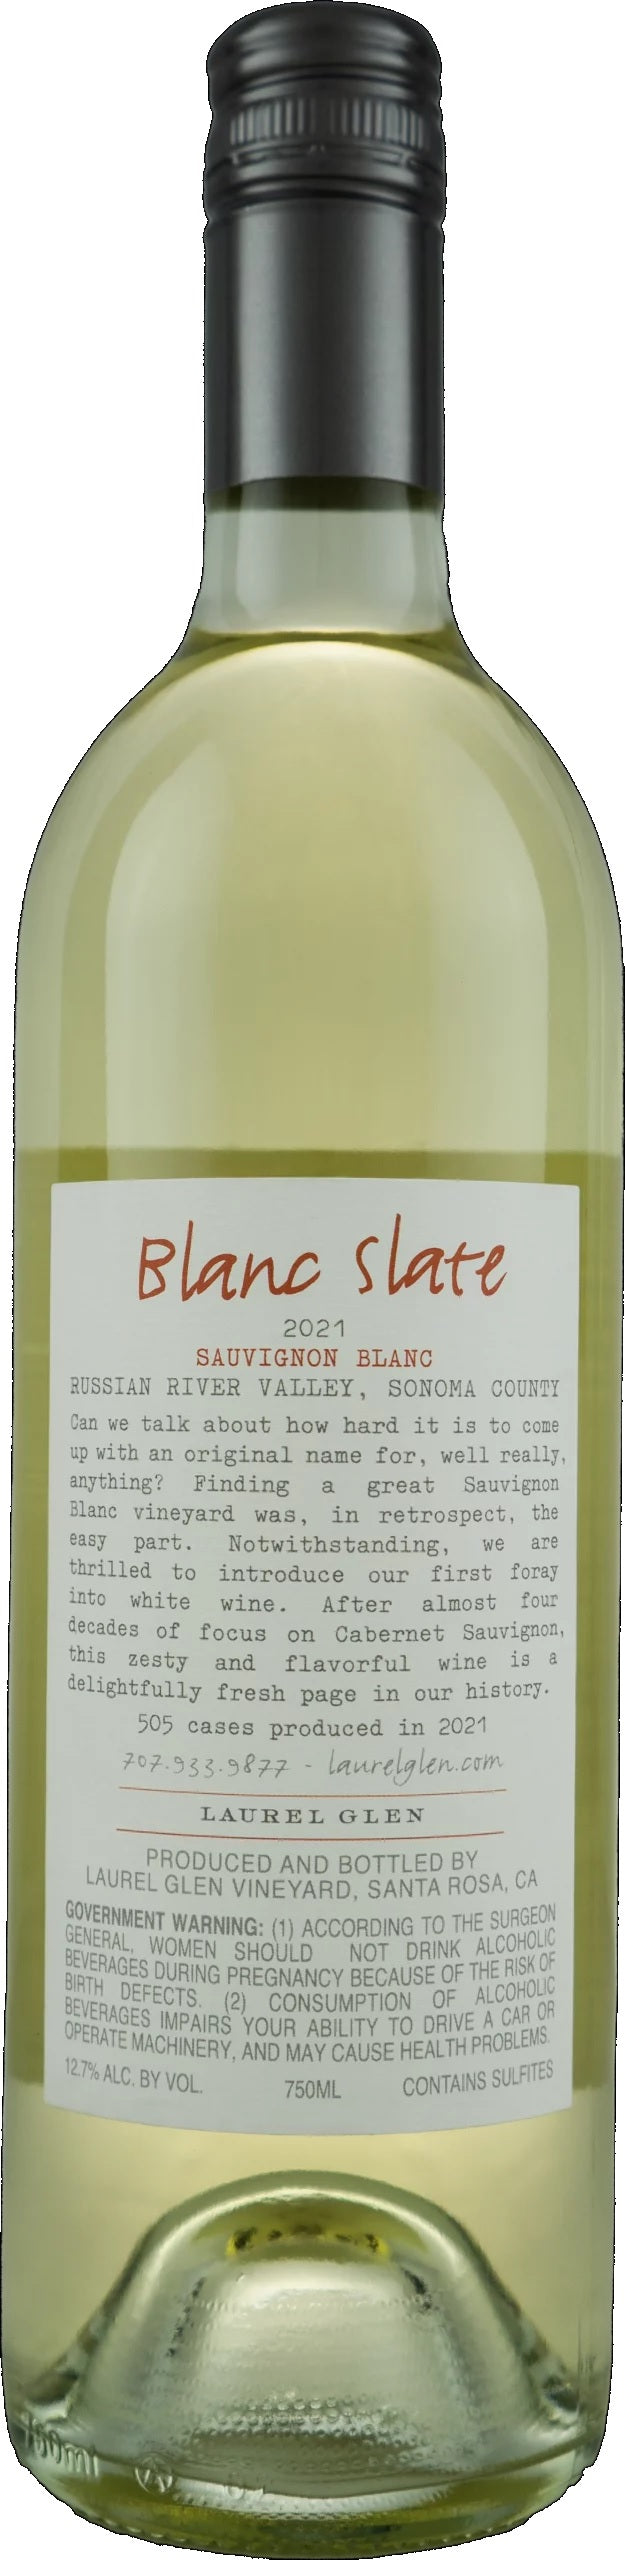 Laurel Glen Vineyard Blanc Slate Russian River Valley Sauvignon Blanc 2021